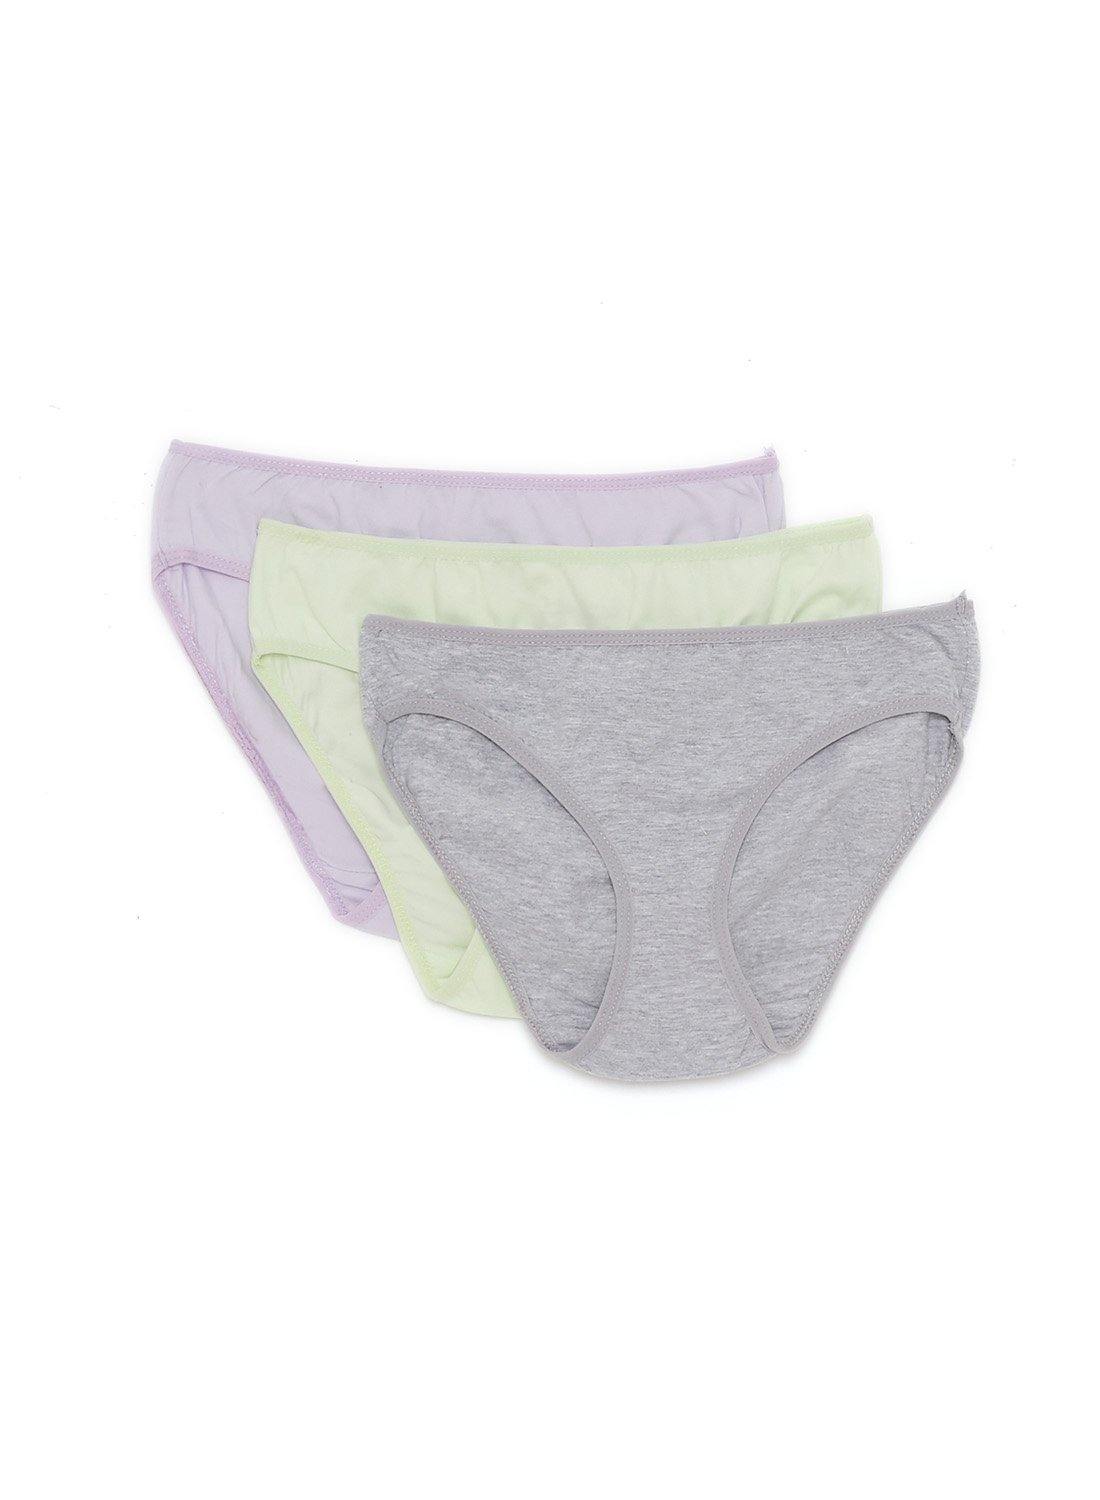 Eve Chantelle Multi Color Underwear - MIDI Cut - Pack Of 3 Panties For Women - chantelleve